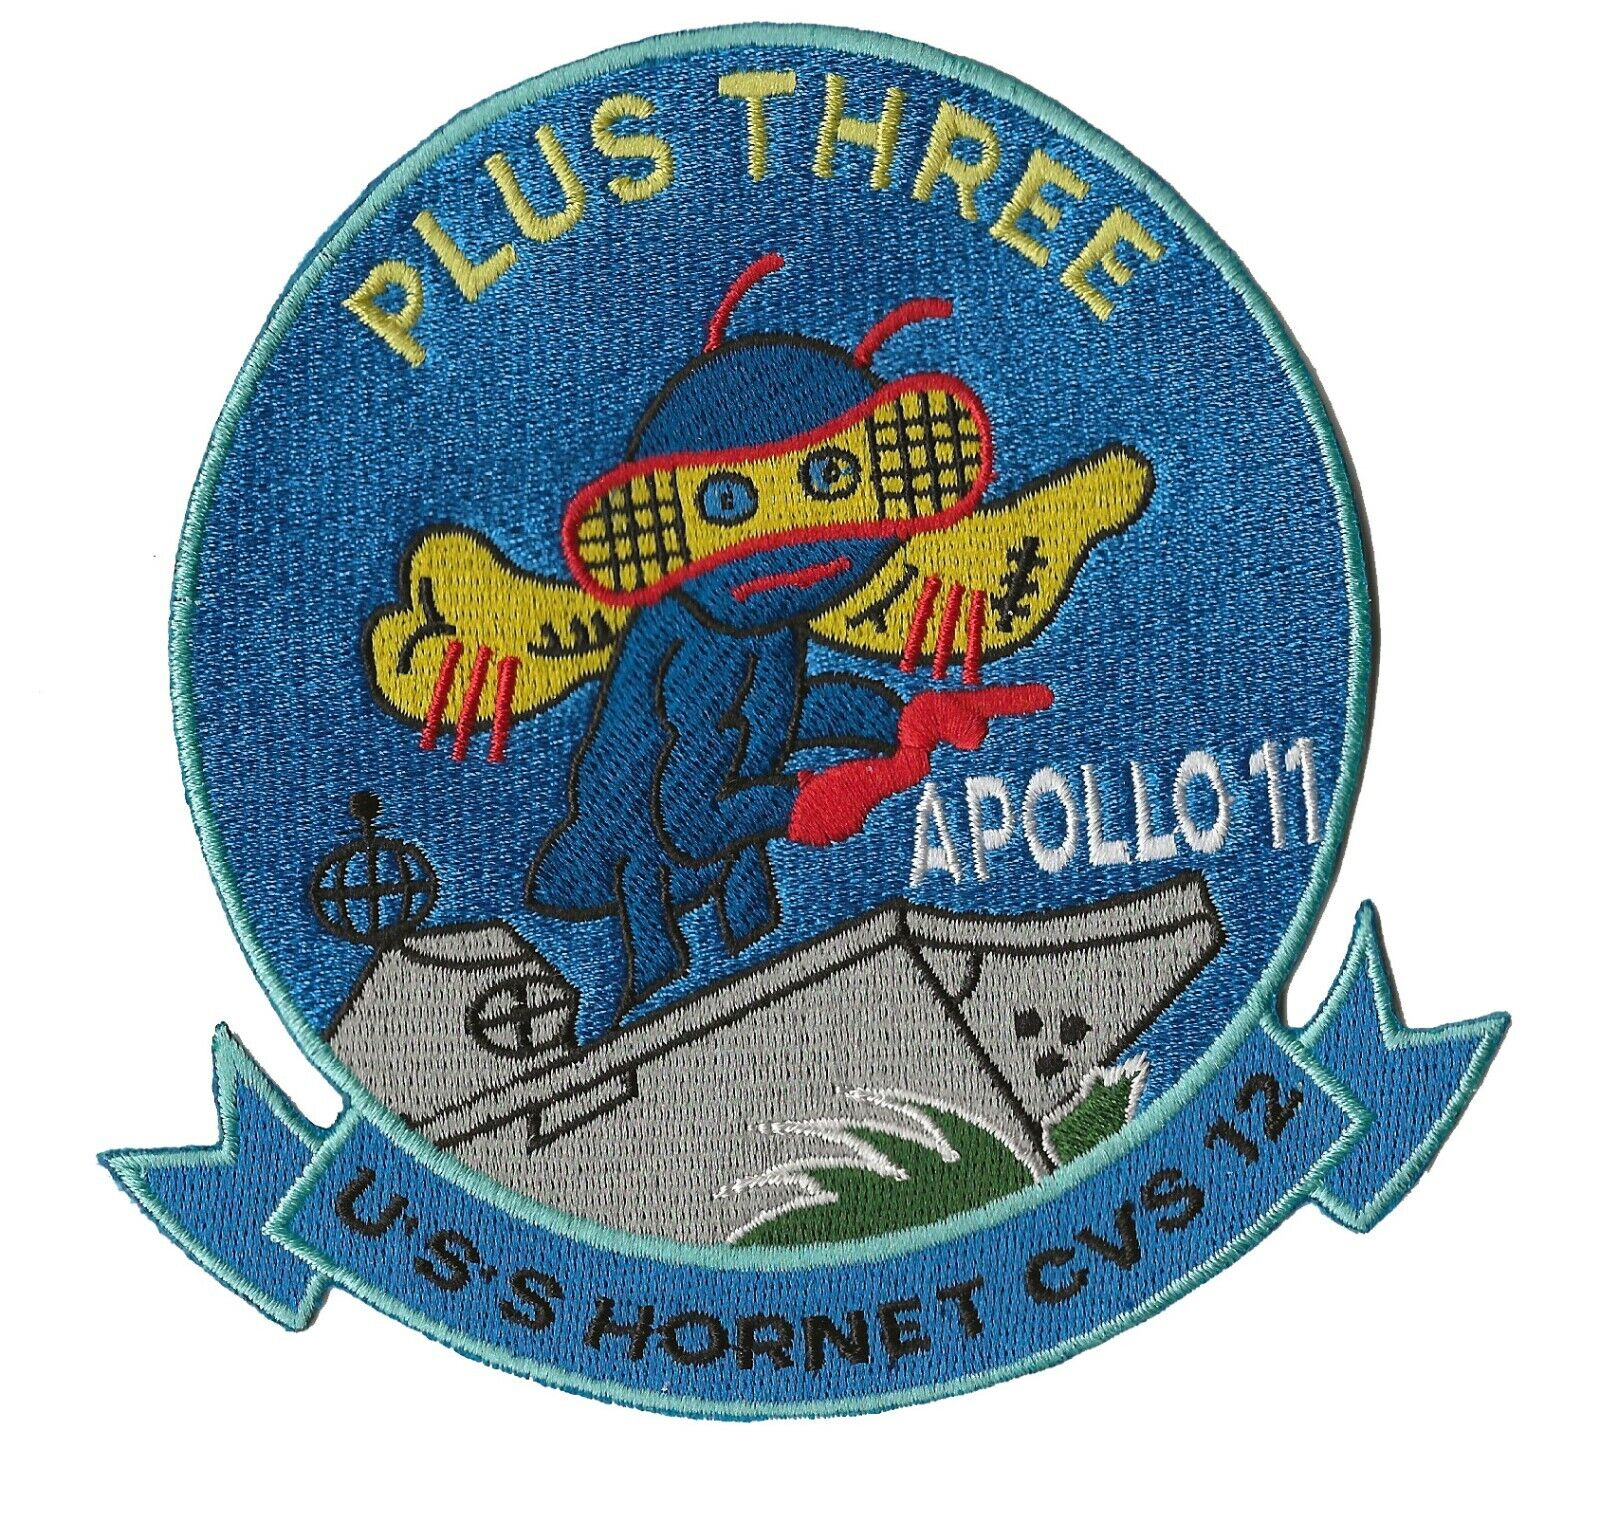 Apollo 11 USS Hornet CVS 12 NASA US Navy space recovery force ship patch